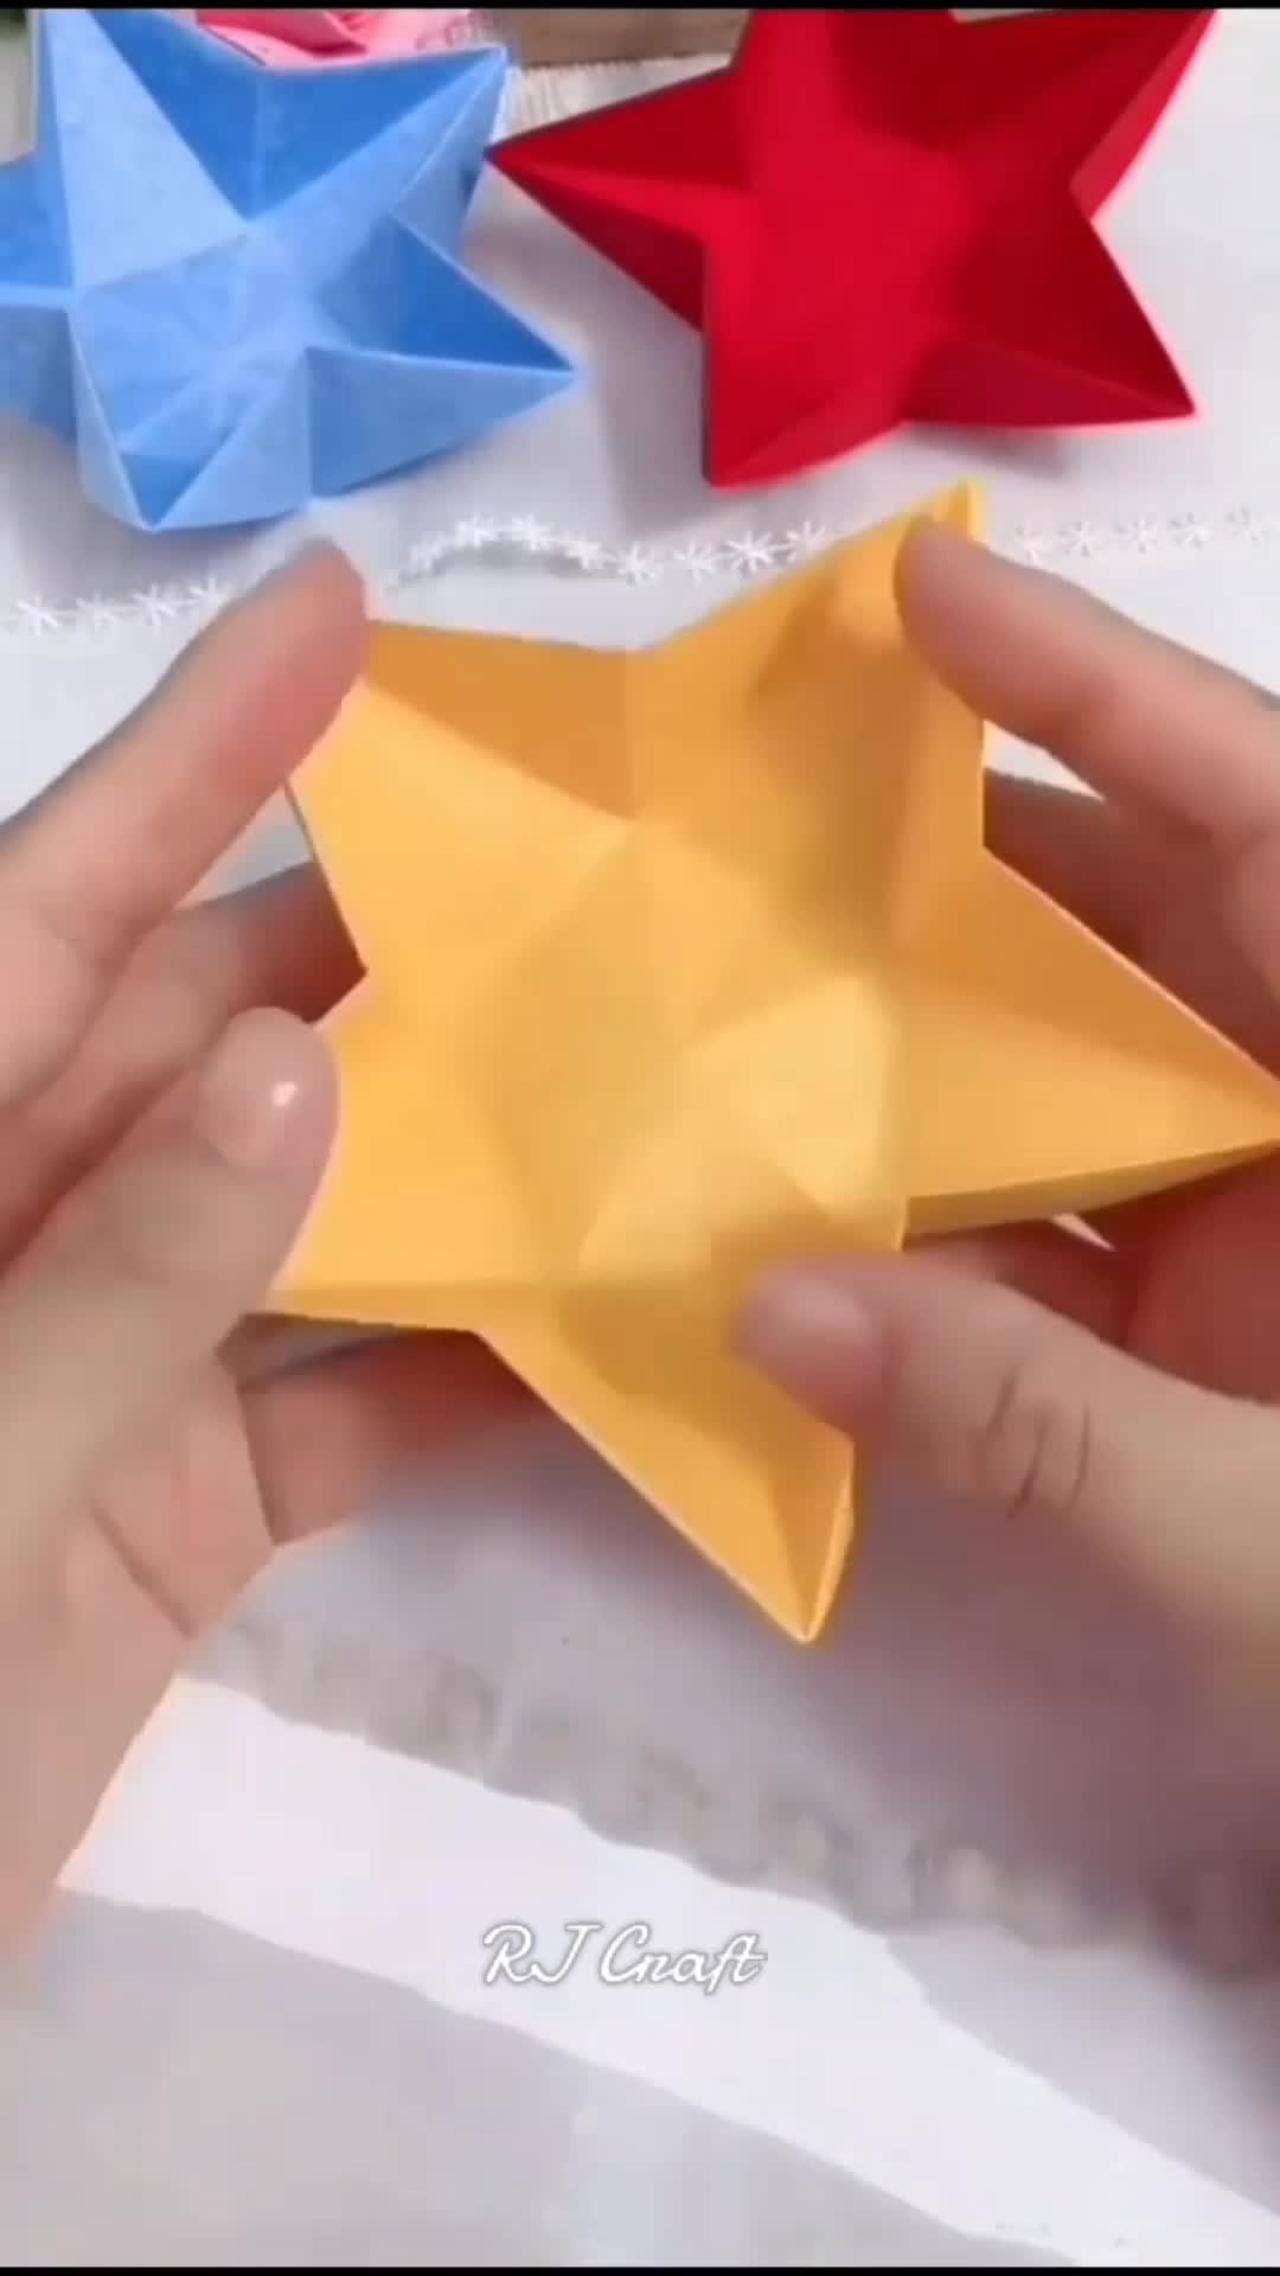 It's Amazing beautiful Hand Craft of Paper Stars | RJ Craft #Crat #Art #Ideas